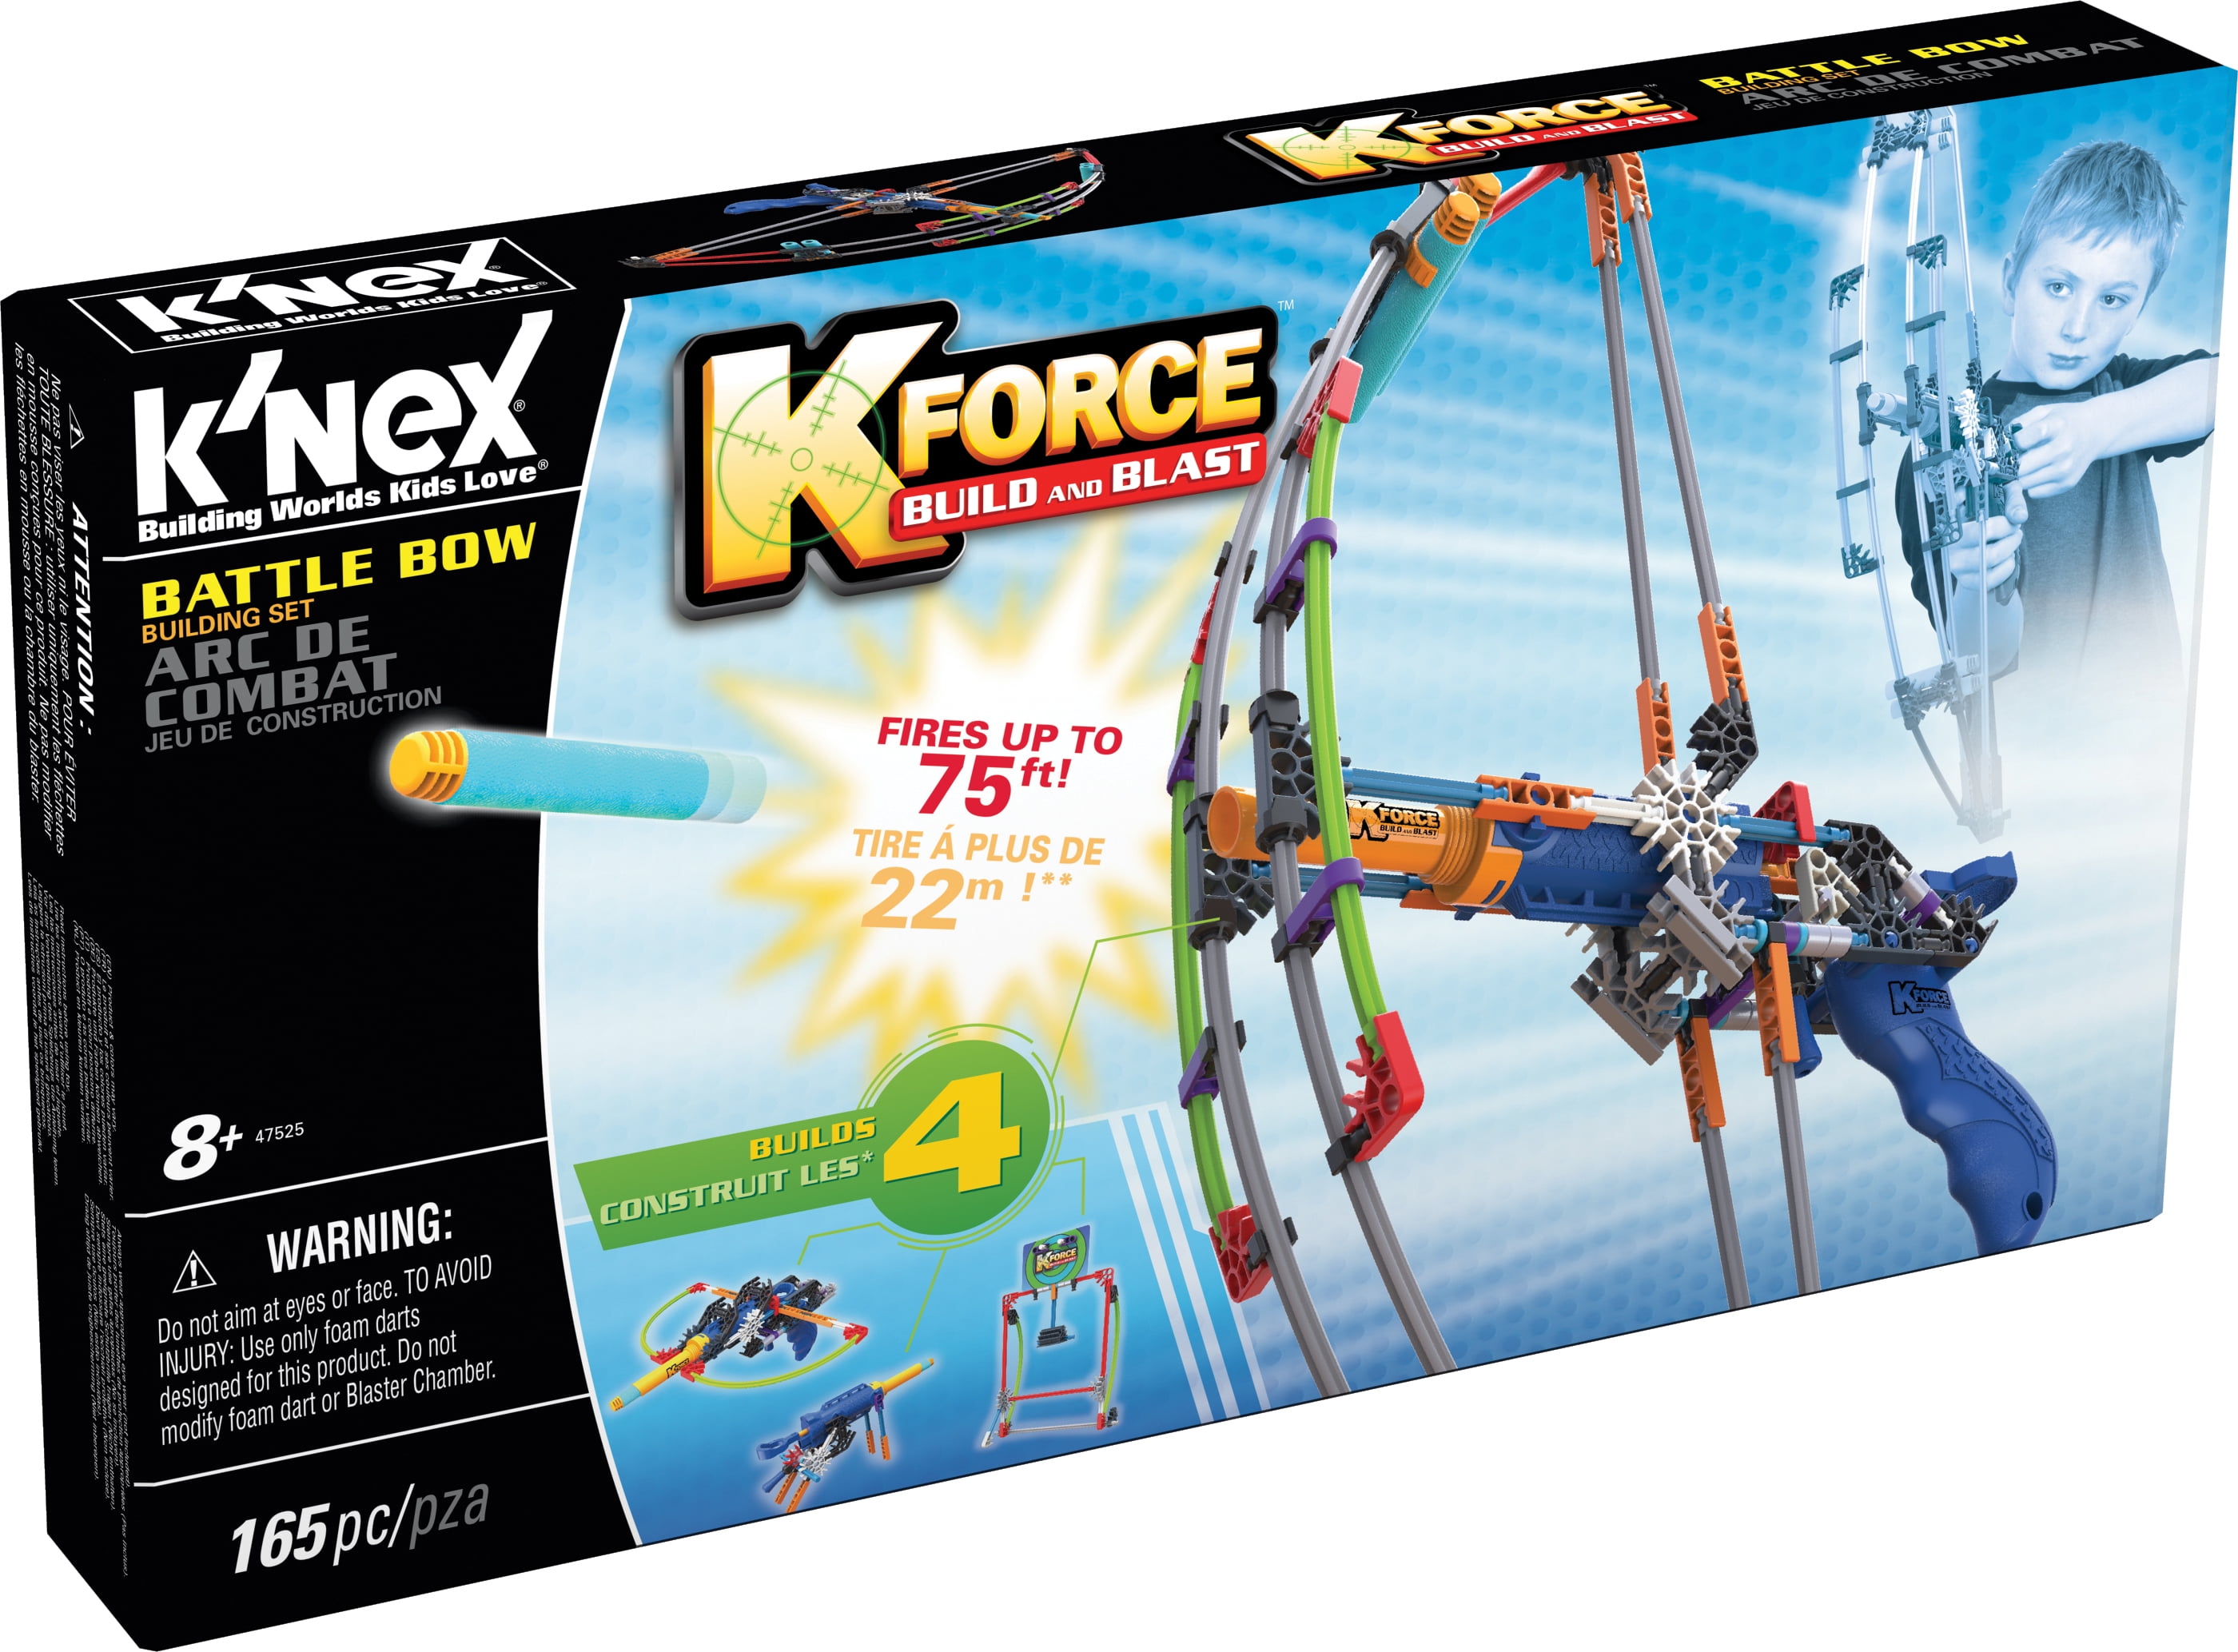 K'NEX K-Force Battle Bow Build and Blast Set 